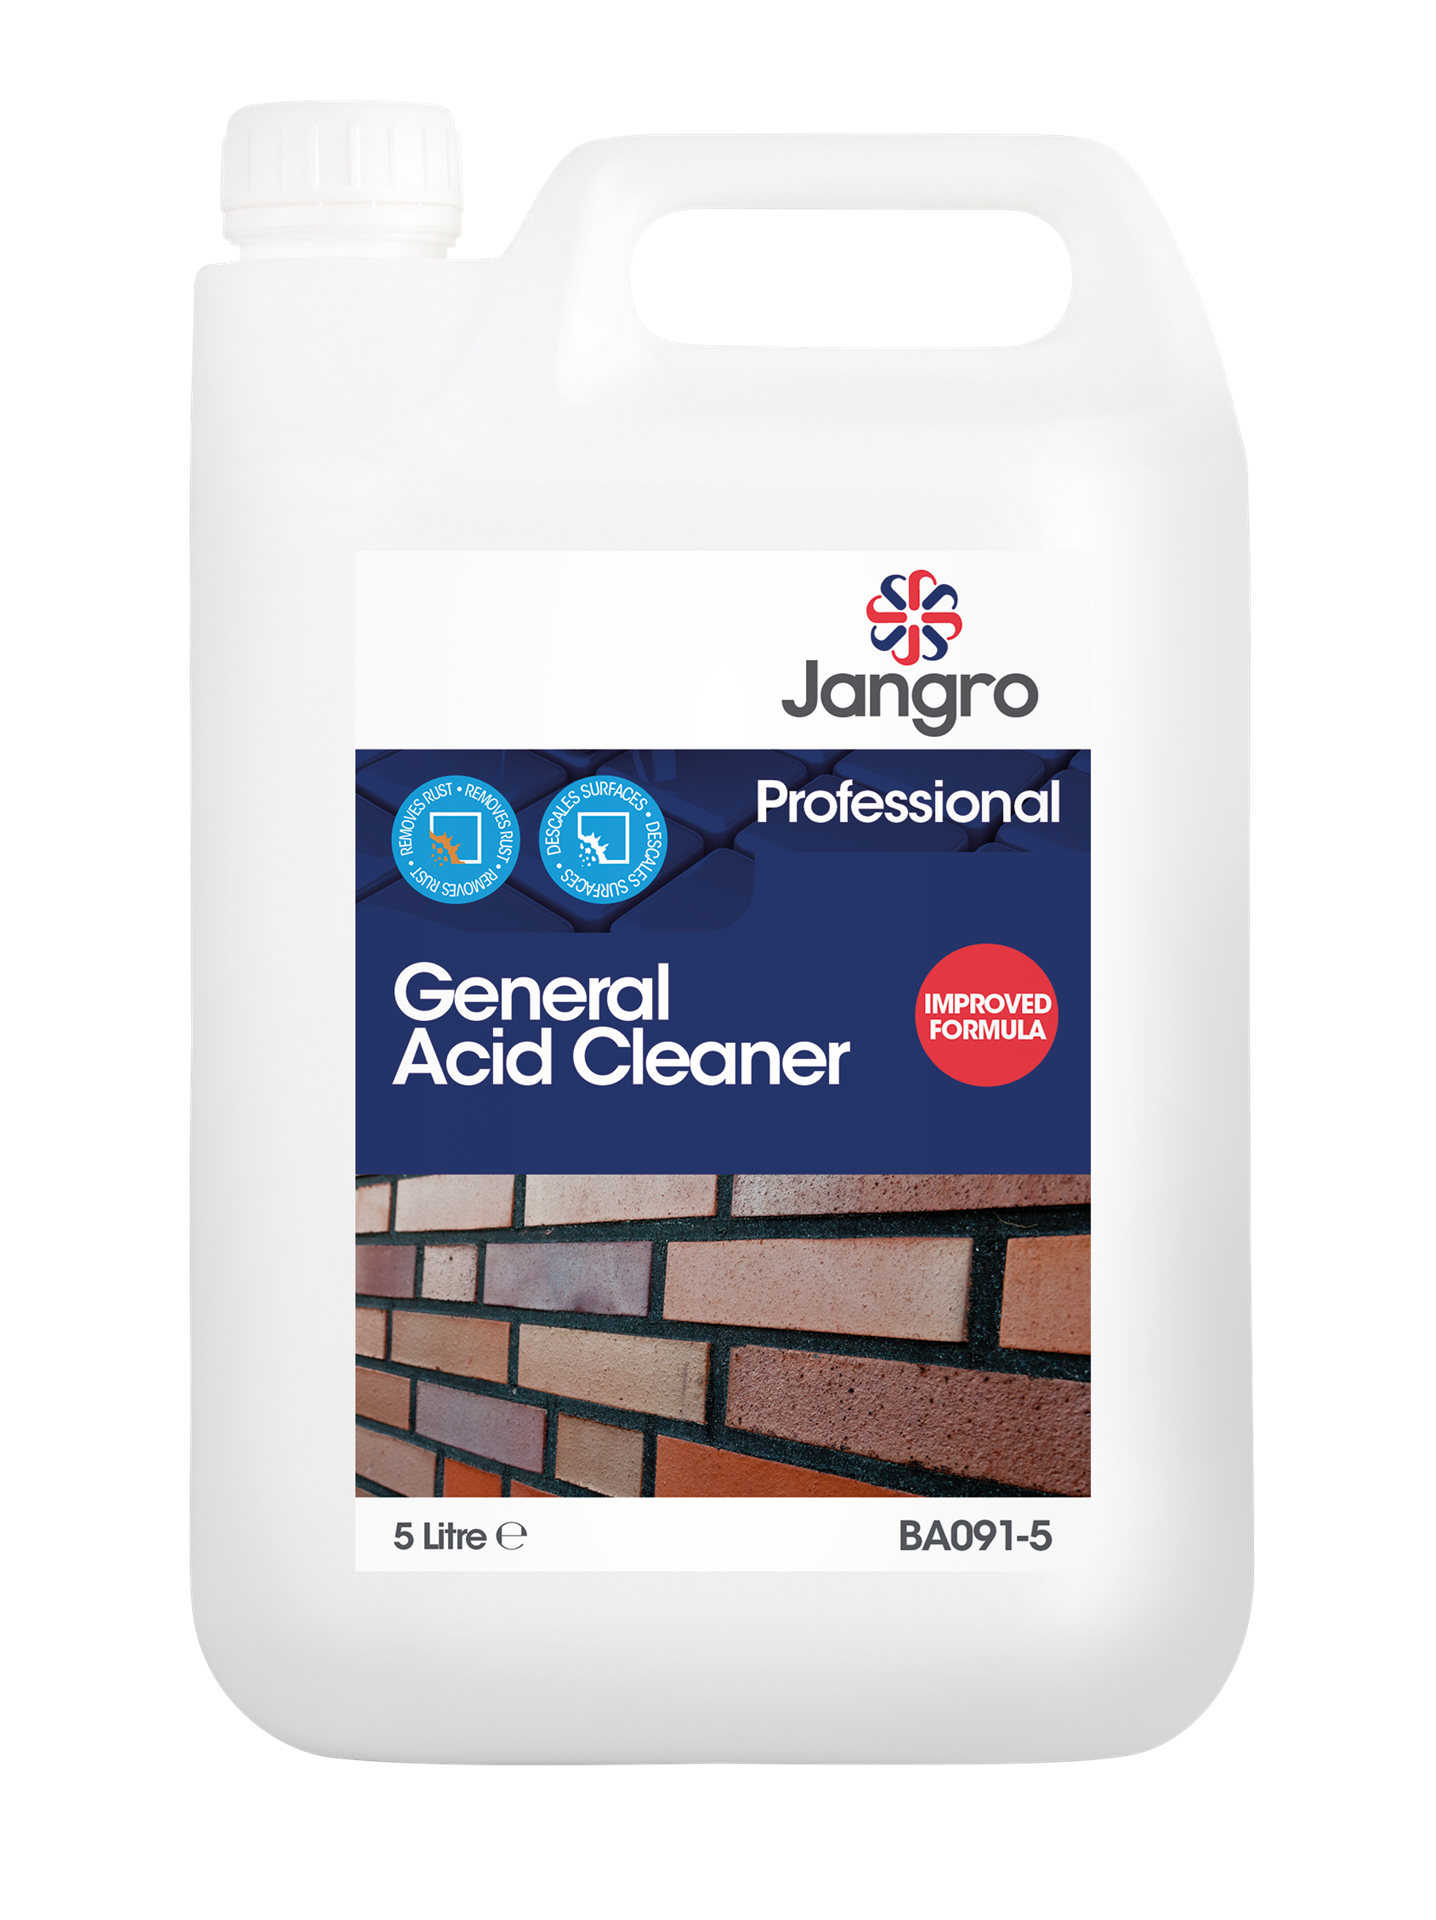 Jangro Professional General Acid Cleaner, 5 Litre